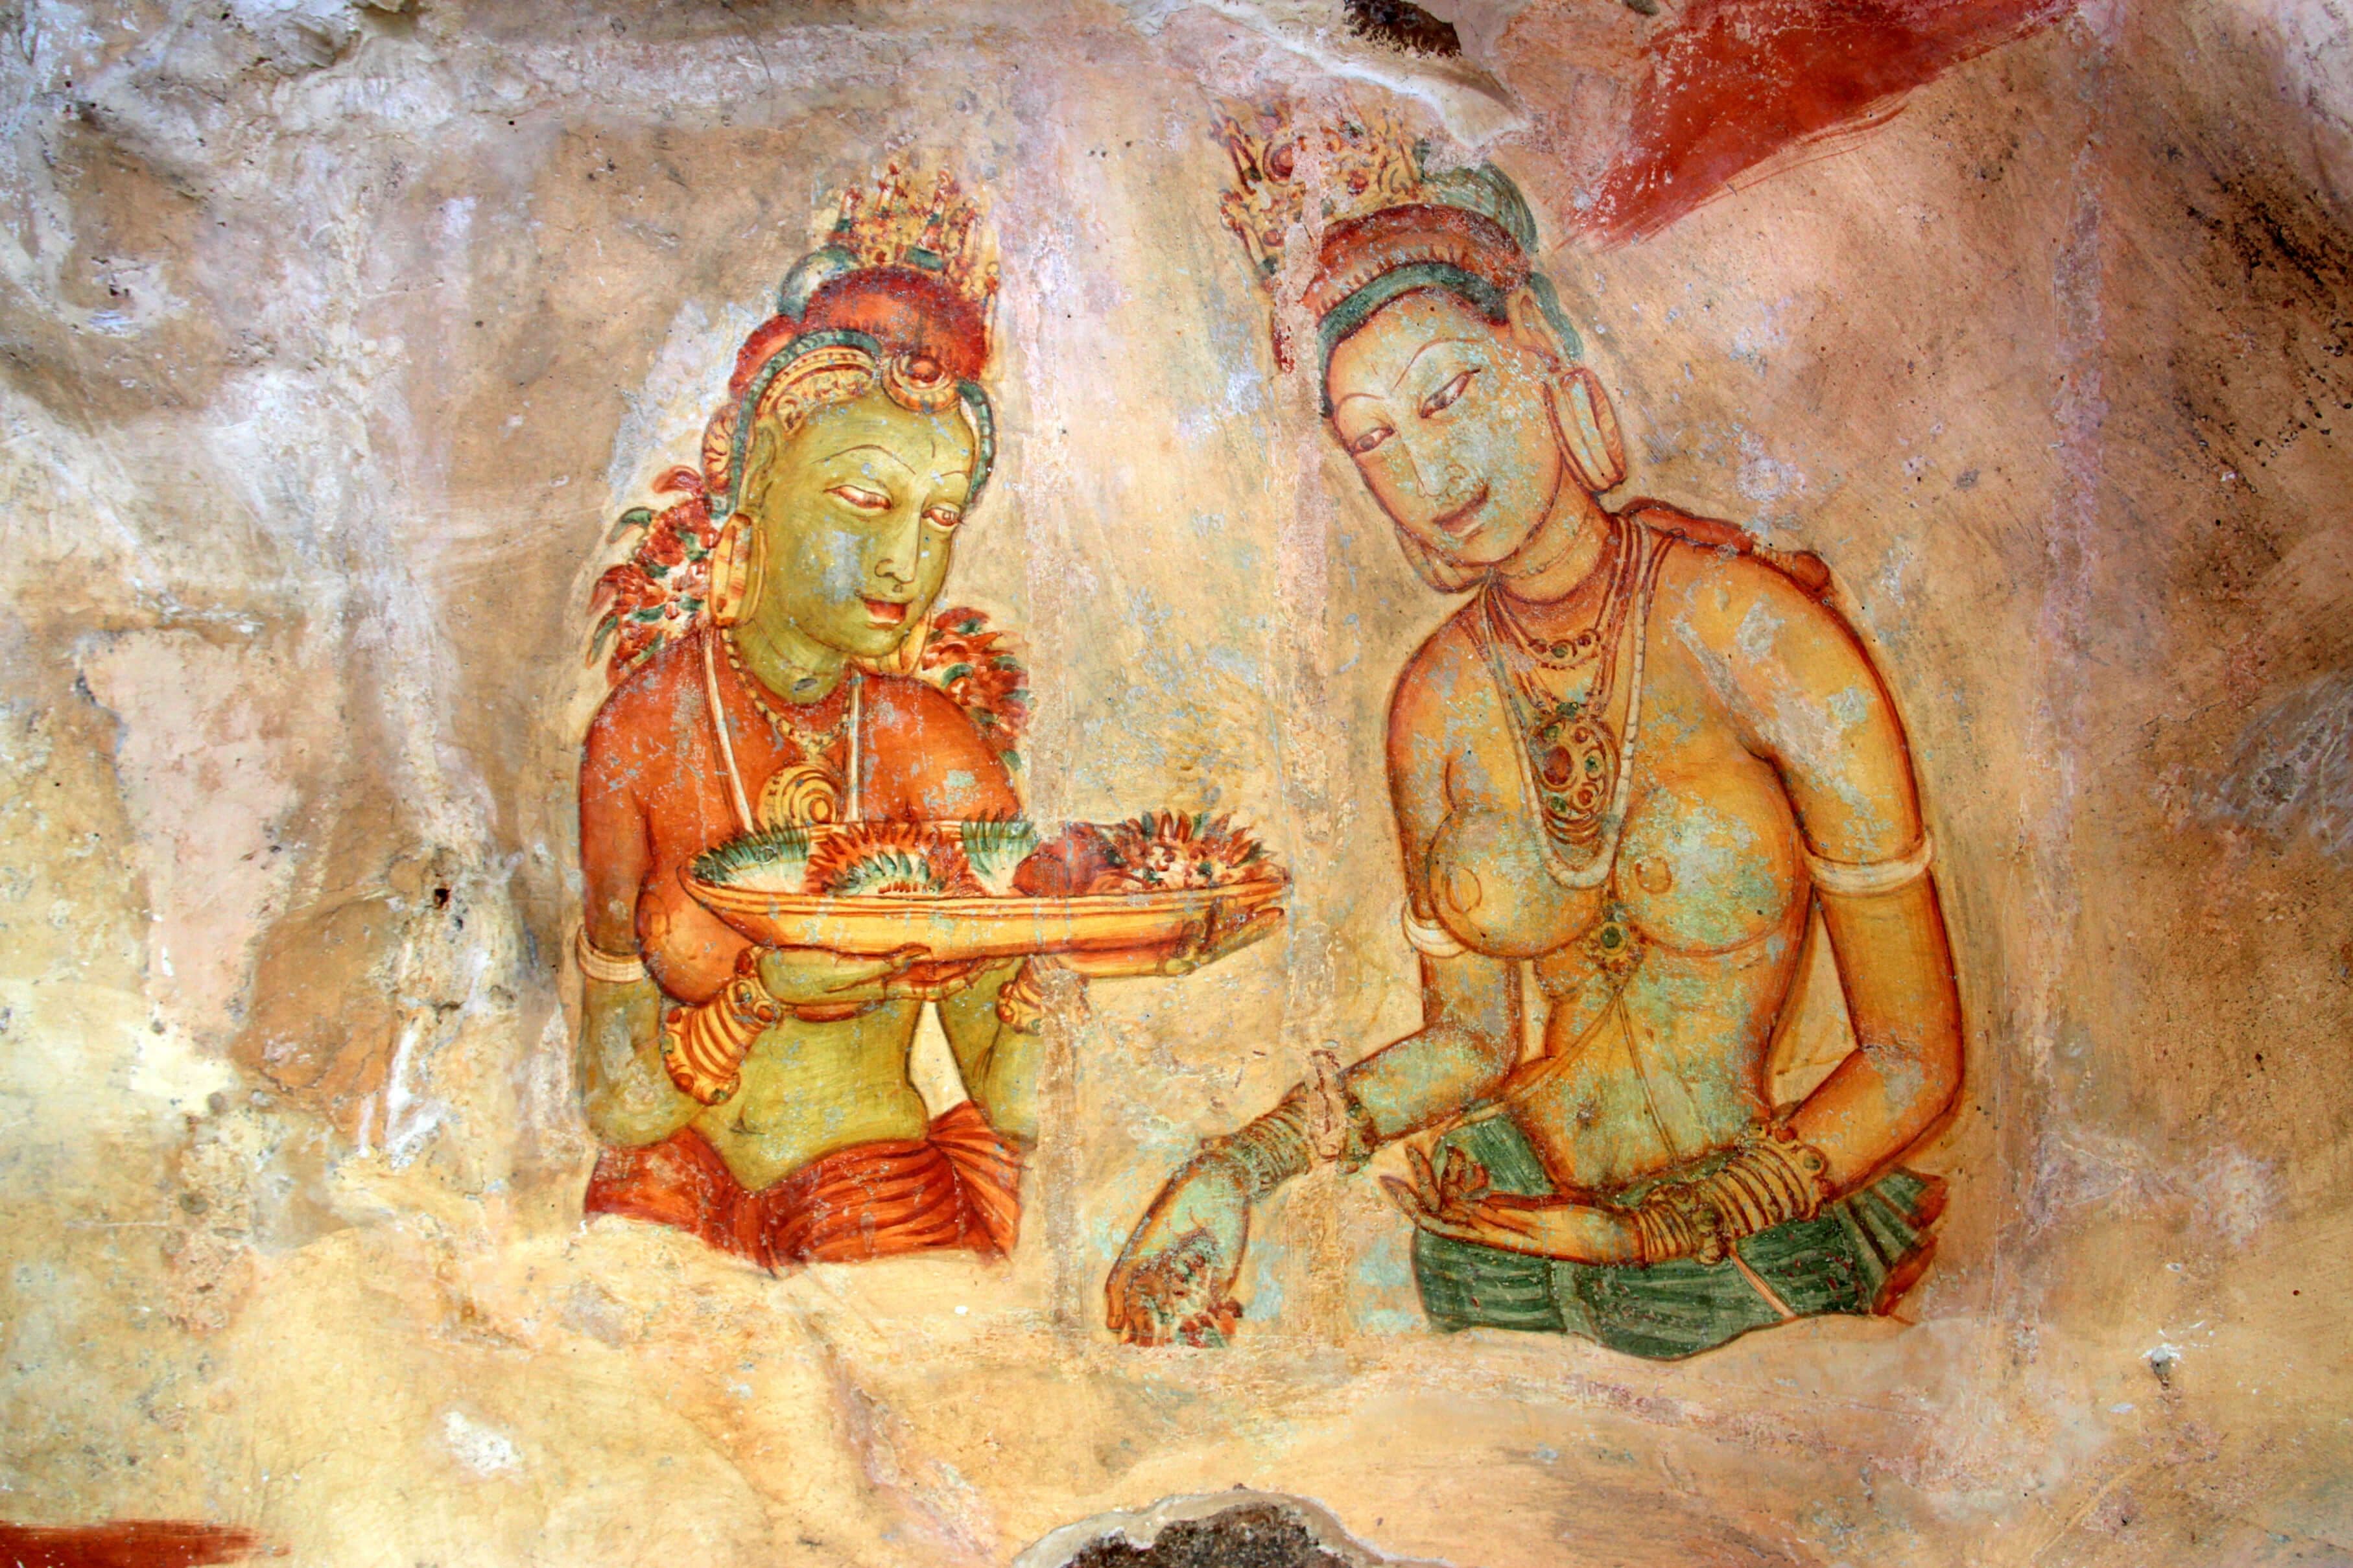 Wall arts in Sigiriya, Sri Lanka.